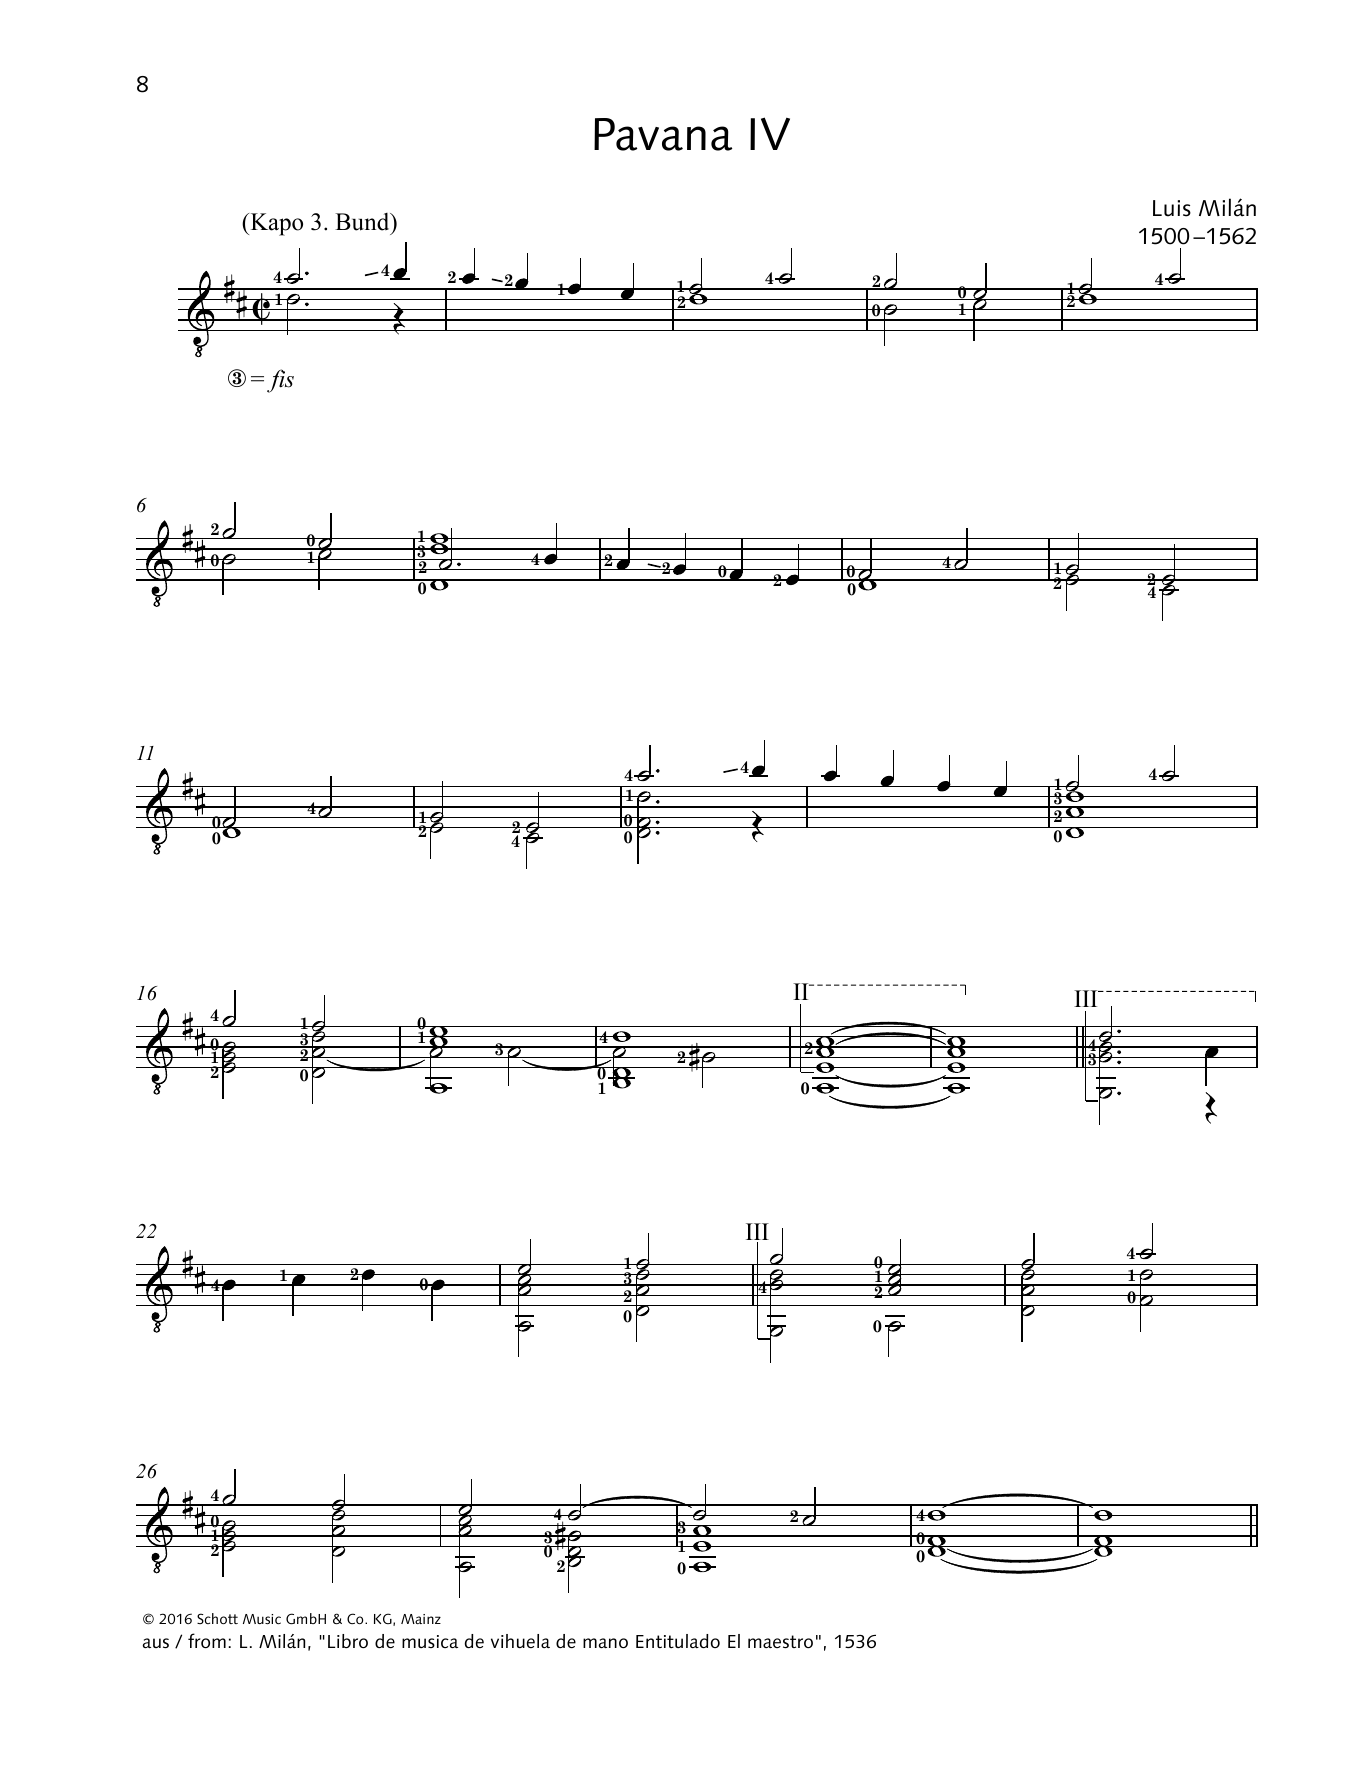 Luis de Milán Pavana IV Sheet Music Notes & Chords for Solo Guitar - Download or Print PDF